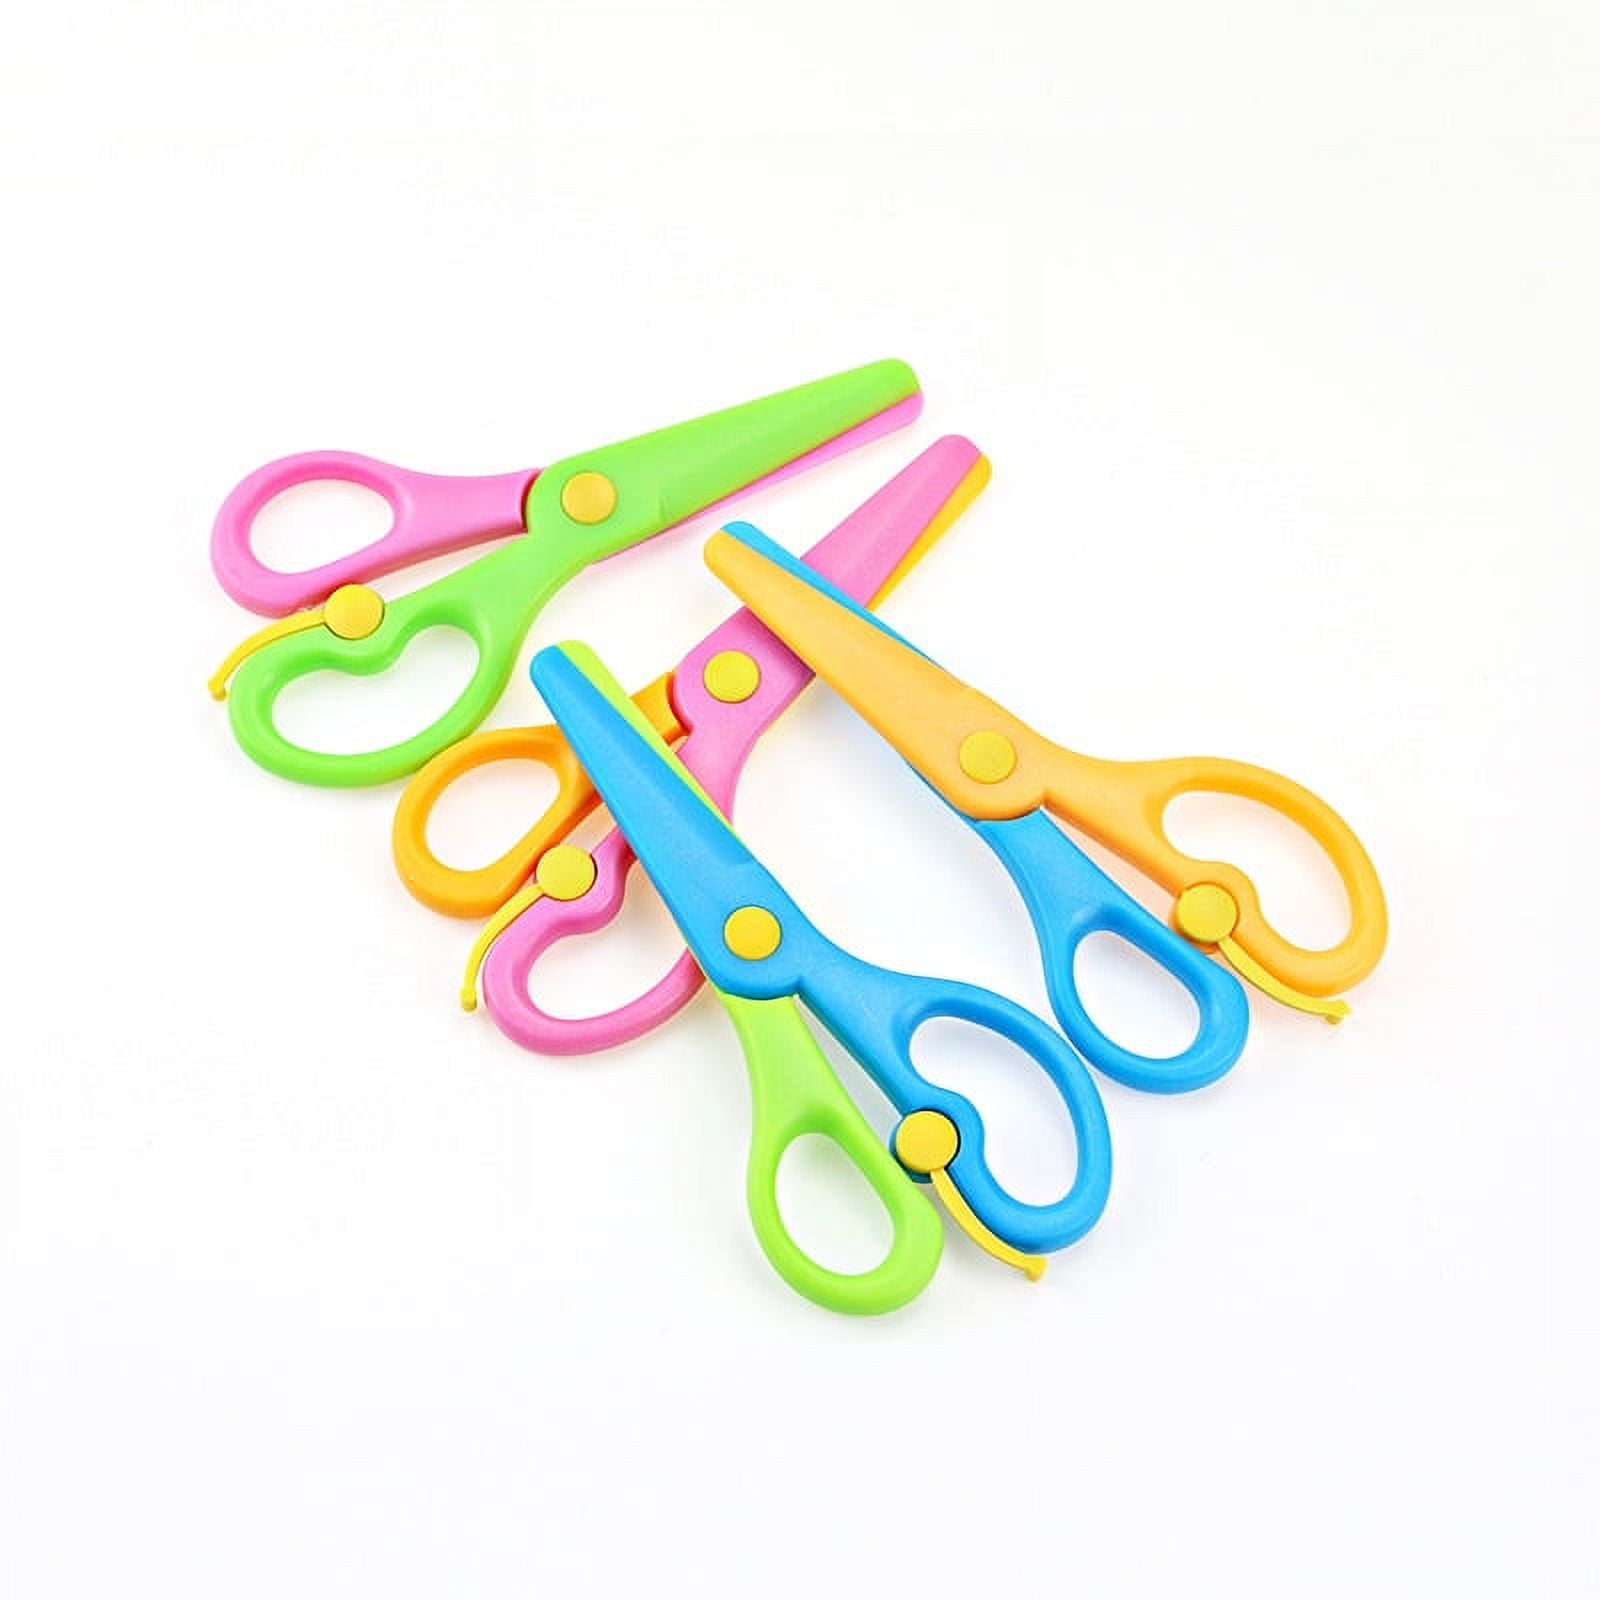 Plastic Scissors for Kids, Training Scissors for Toddlers in School 4 Pcs